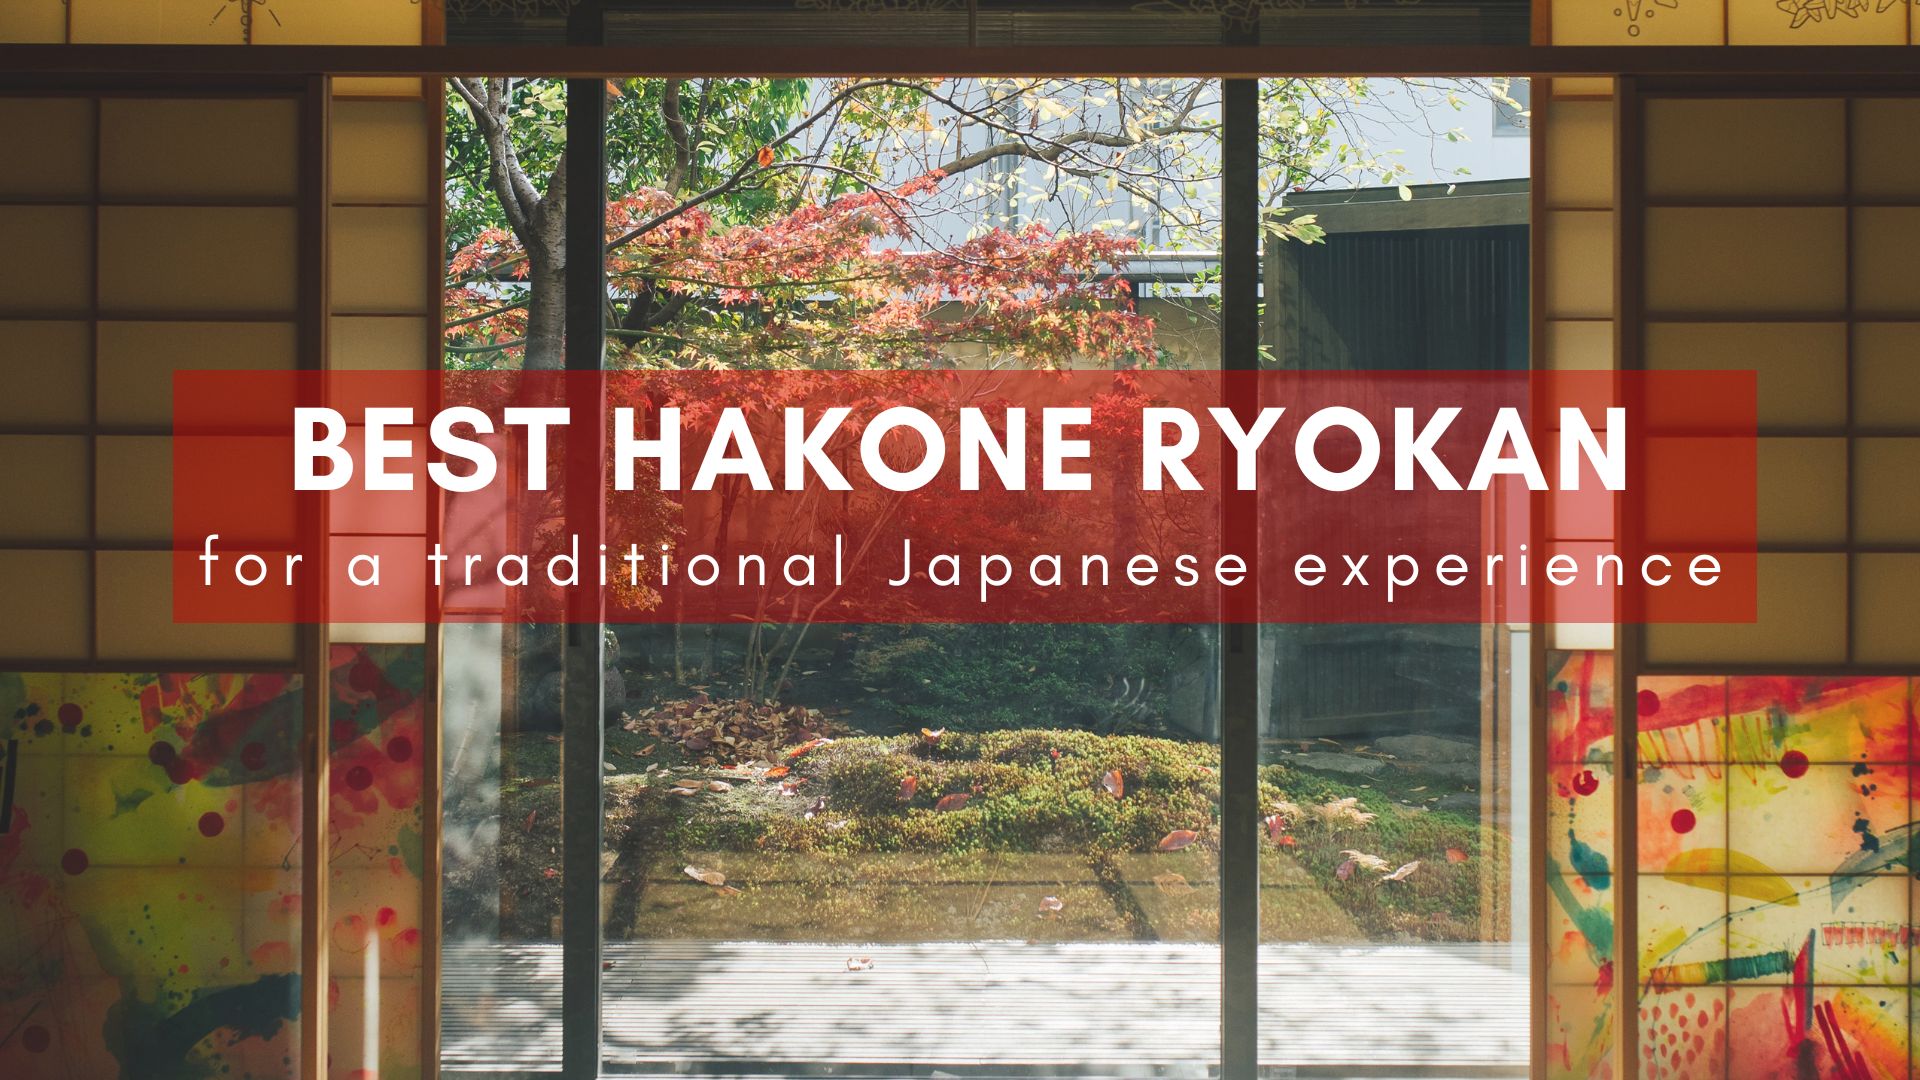 Hakone ryokan, best ryokan in Hakone, Hakone ryokan for traditional Japanese experience, traditional Japanese ryokan in Hakone